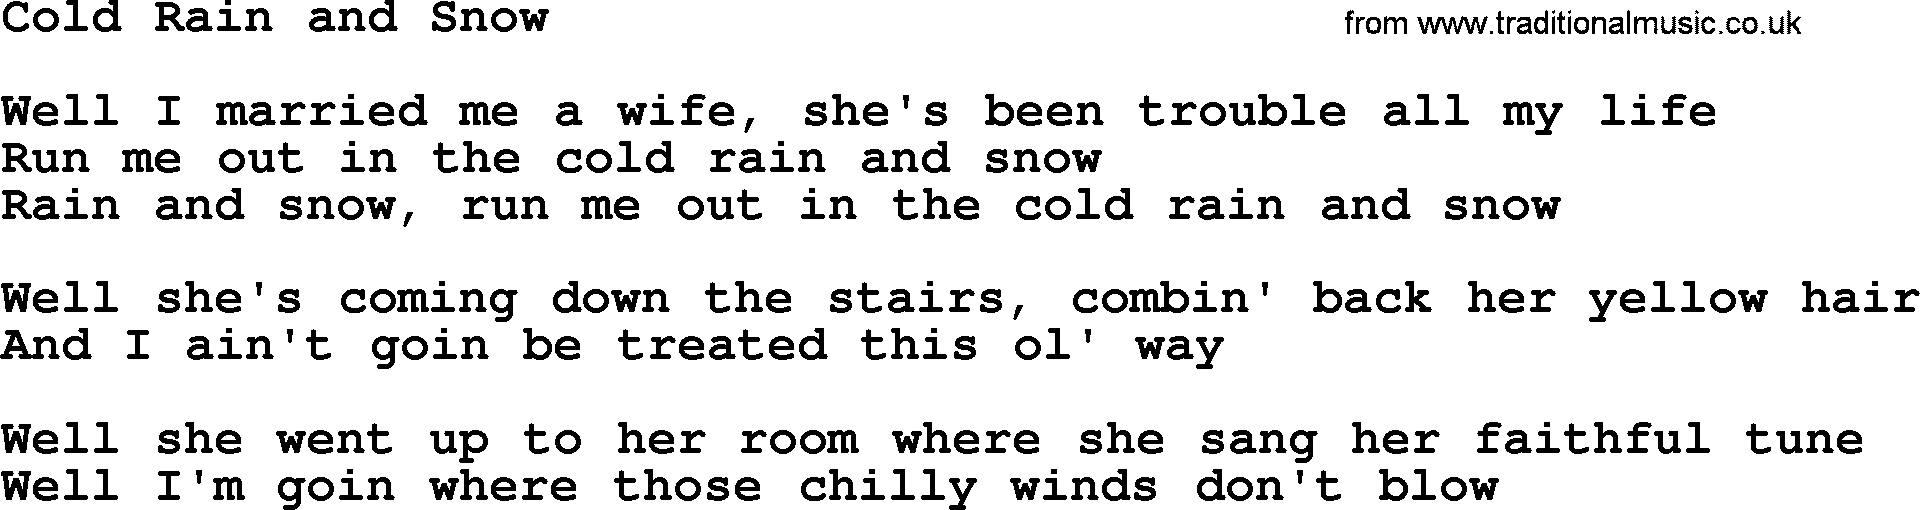 The Byrds song Cold Rain And Snow, lyrics